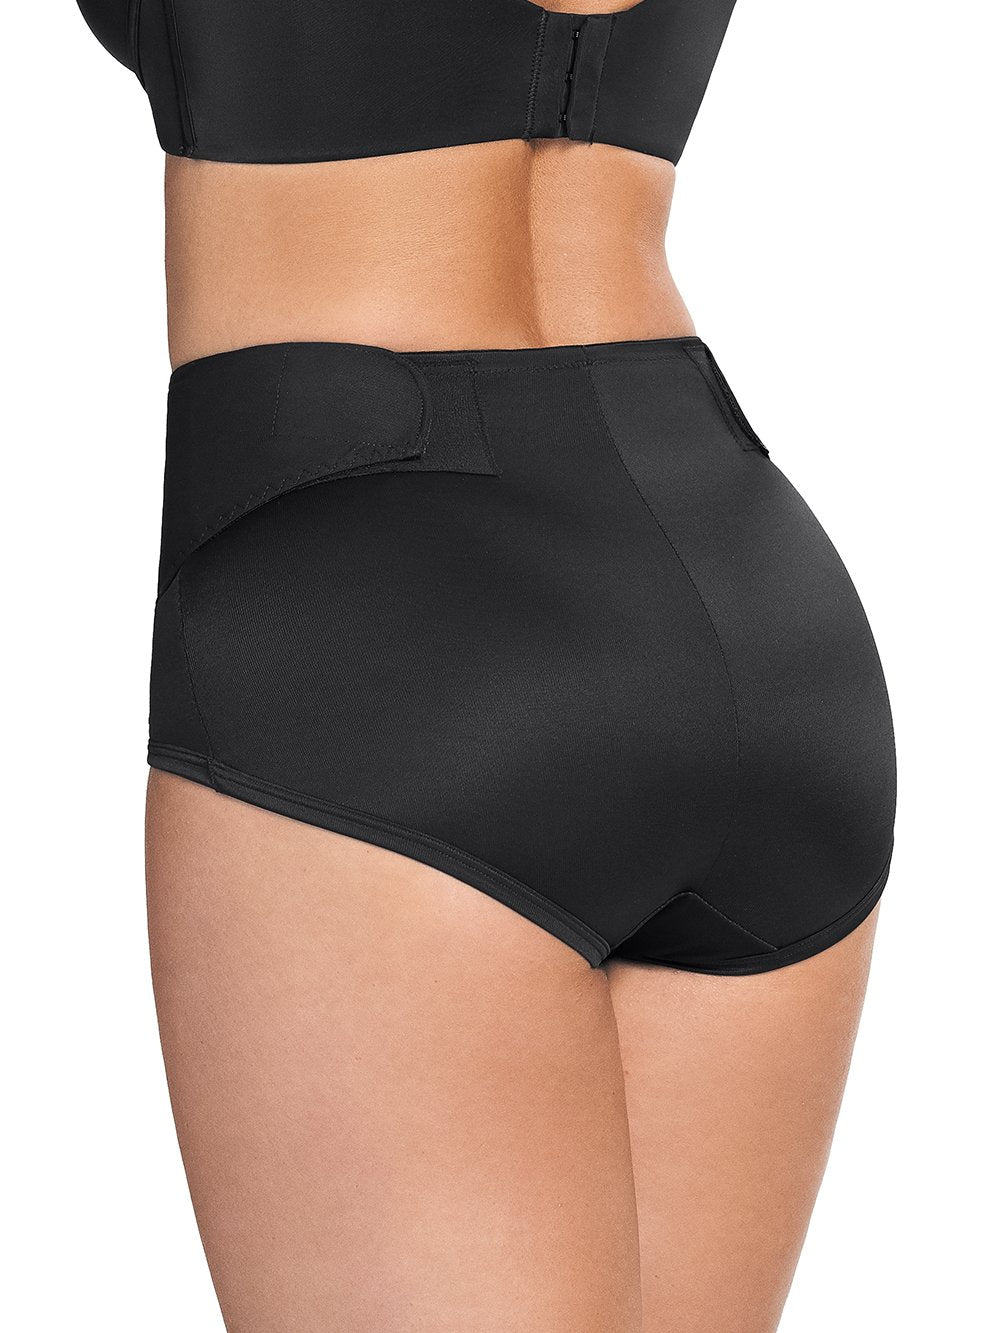 40 D Bra for Women Postpartum Compression Underwear Black Lingerie Bras for  Women Full Coverage Black Lingerie Sexy Plus Size Lingerie 3X Nude